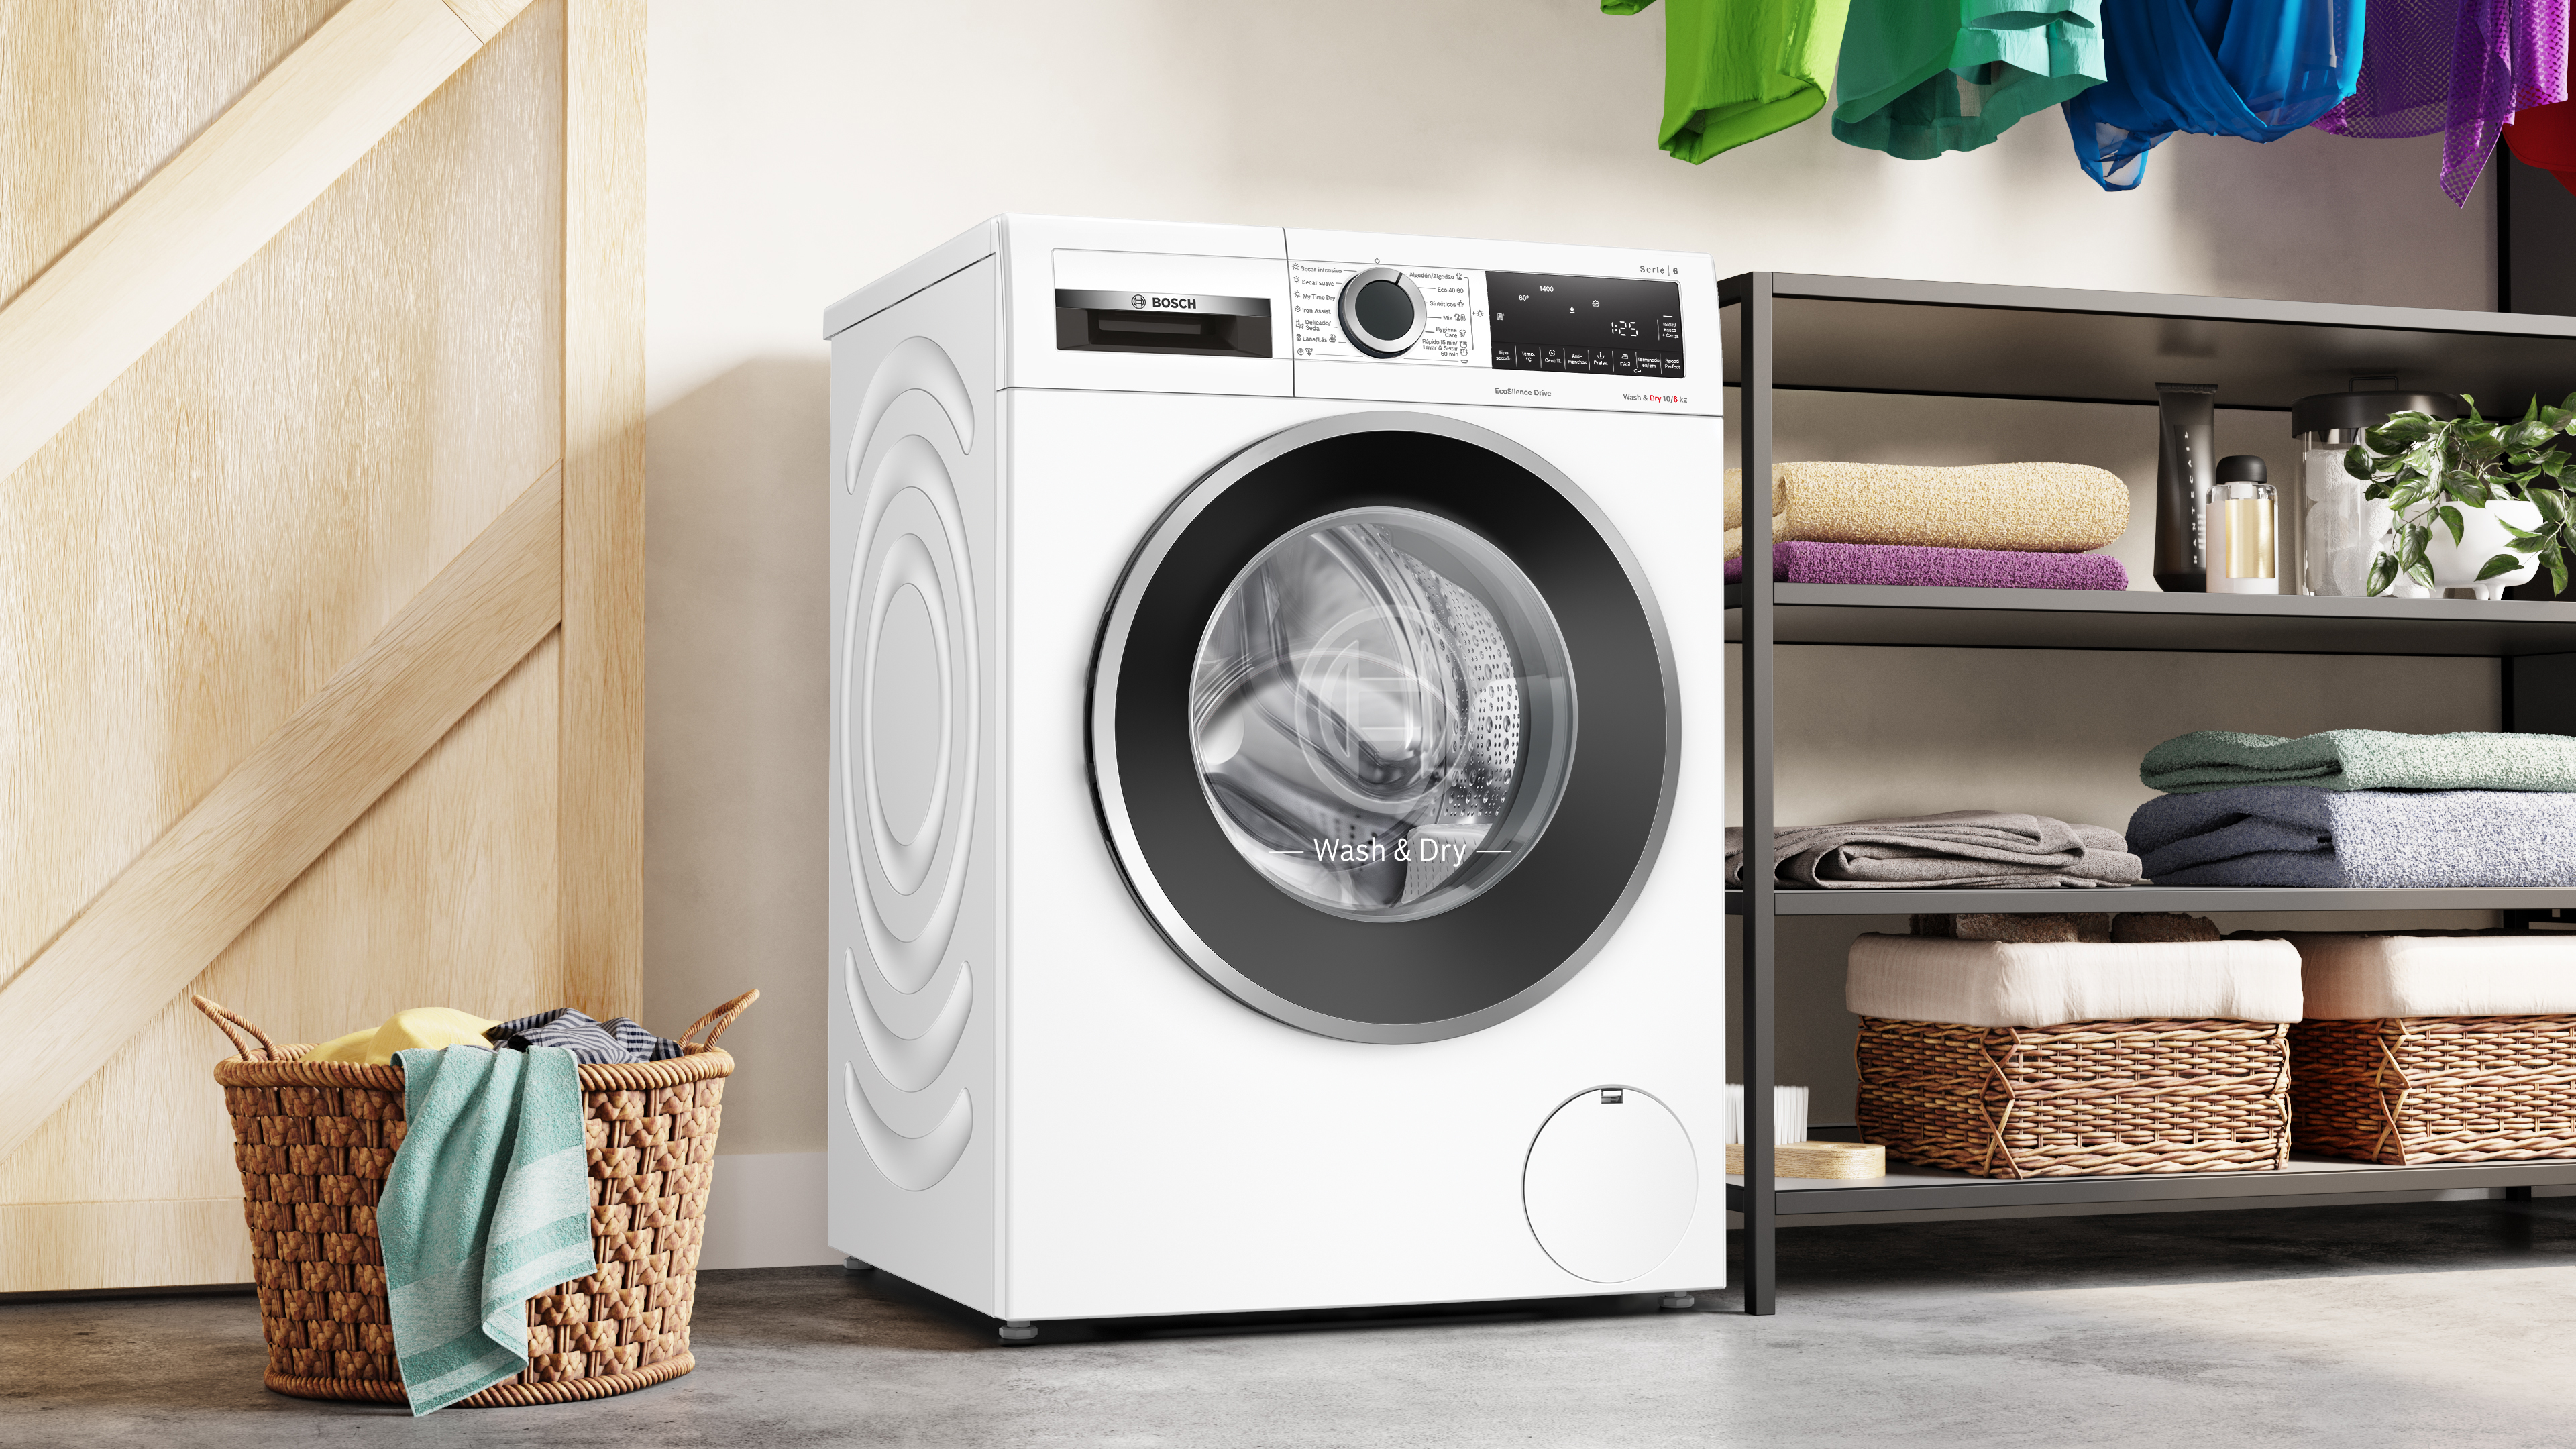 Lavadora secadora Bosch WNG25400ES